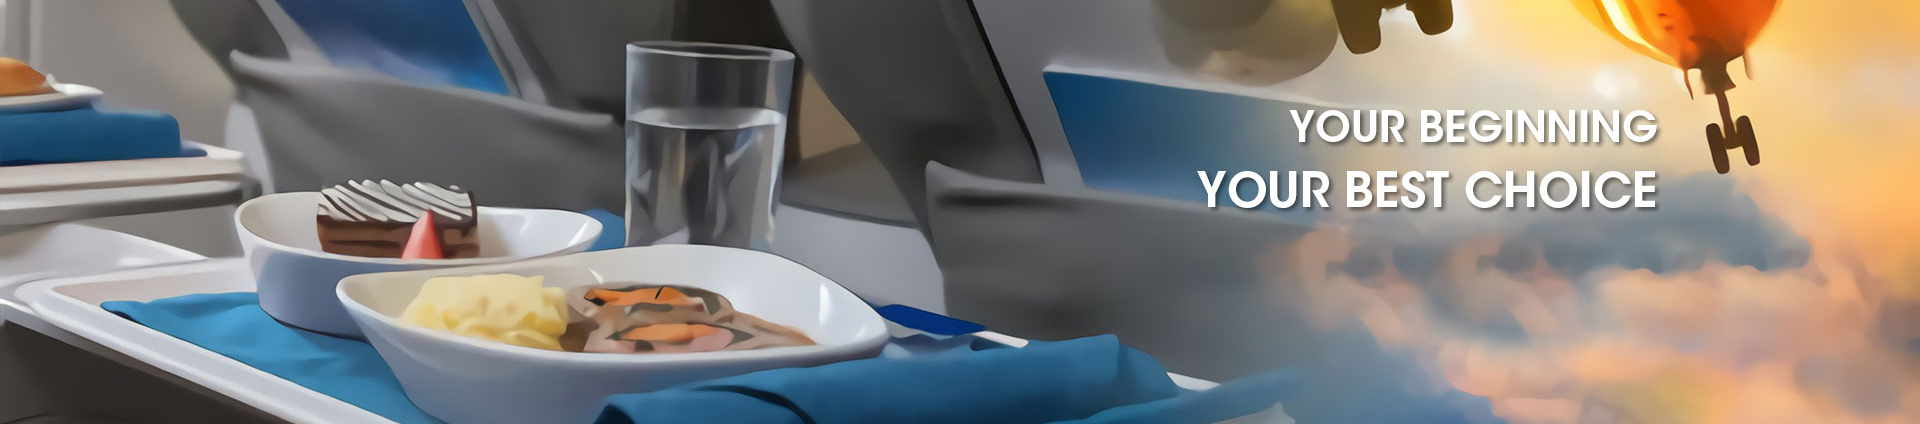 Reusable Cotton Airplane Headrest Cover